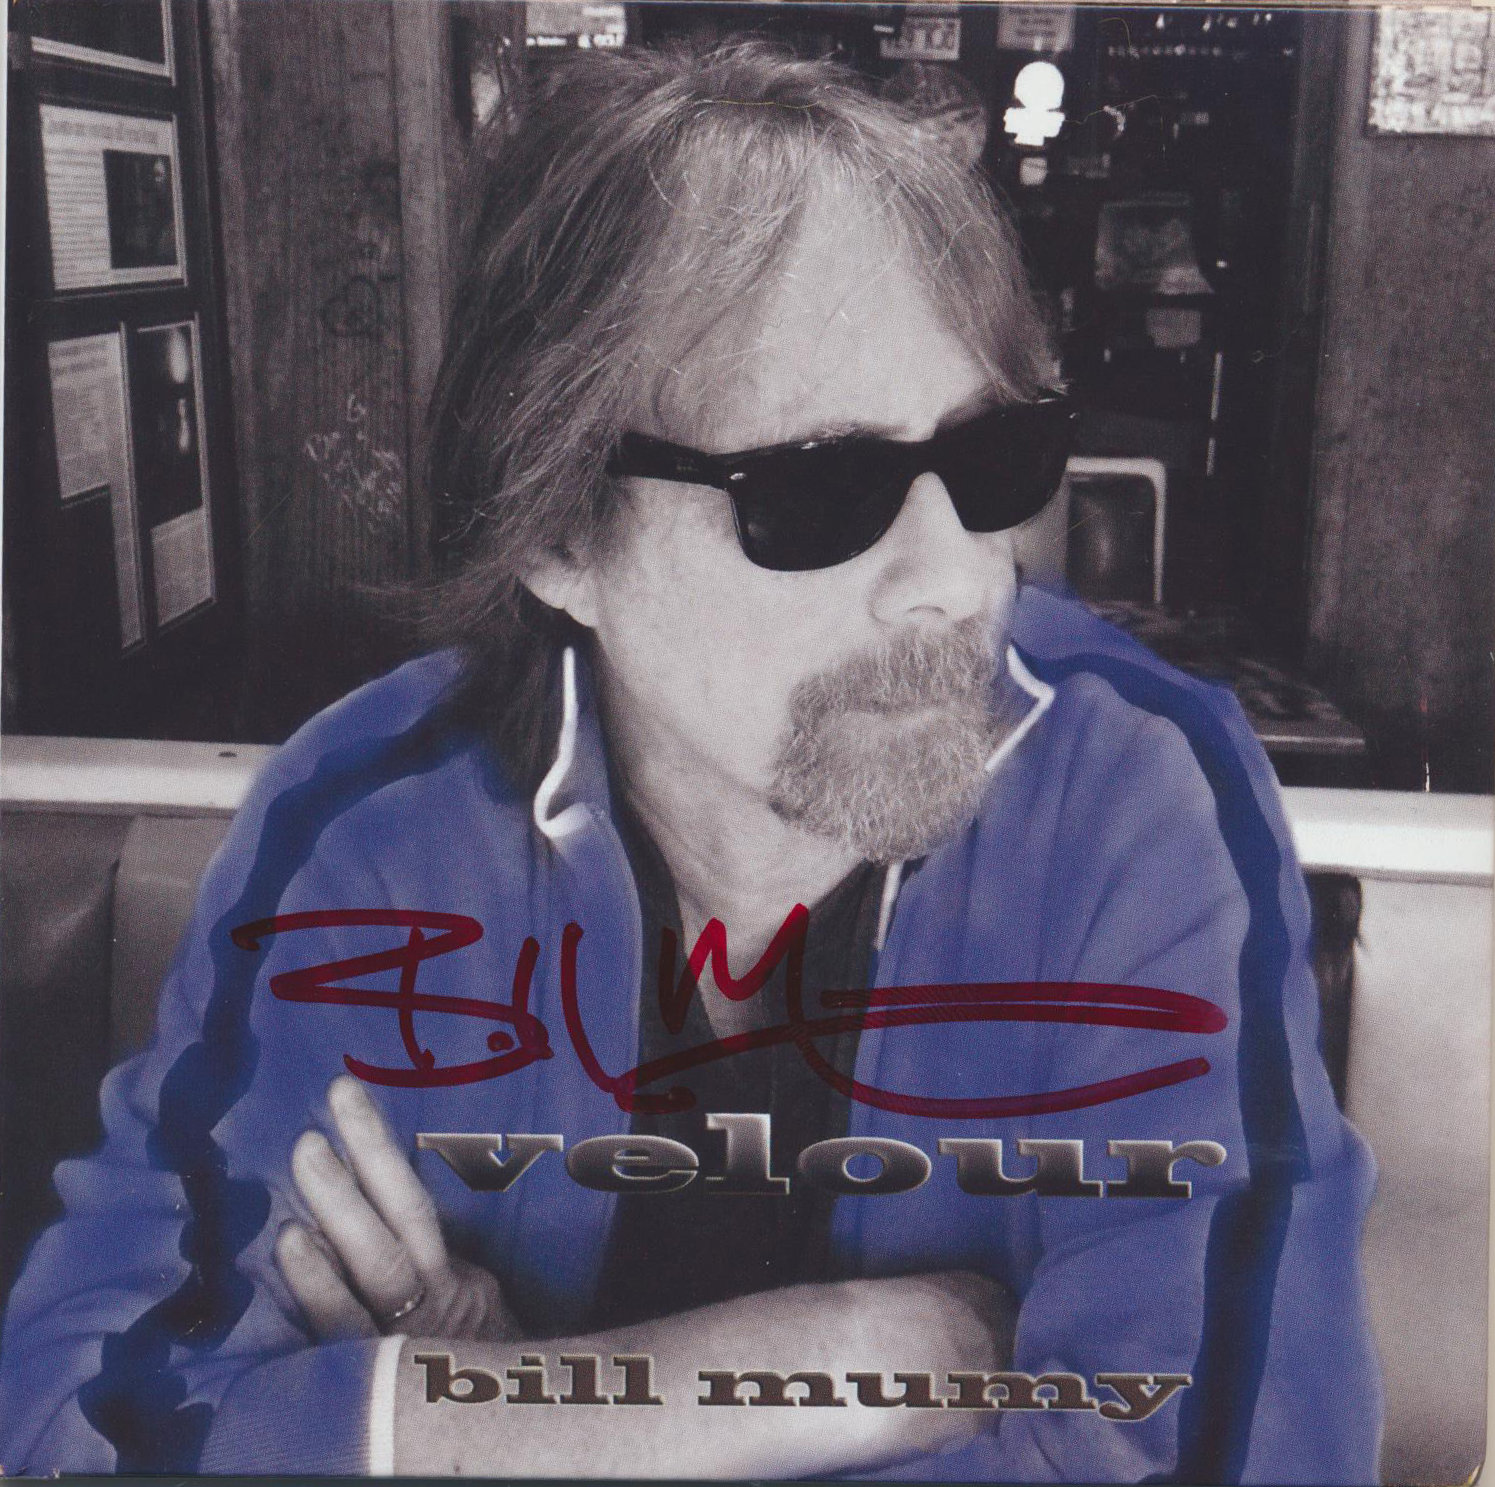 #11 Velour - Bill Mumy CD